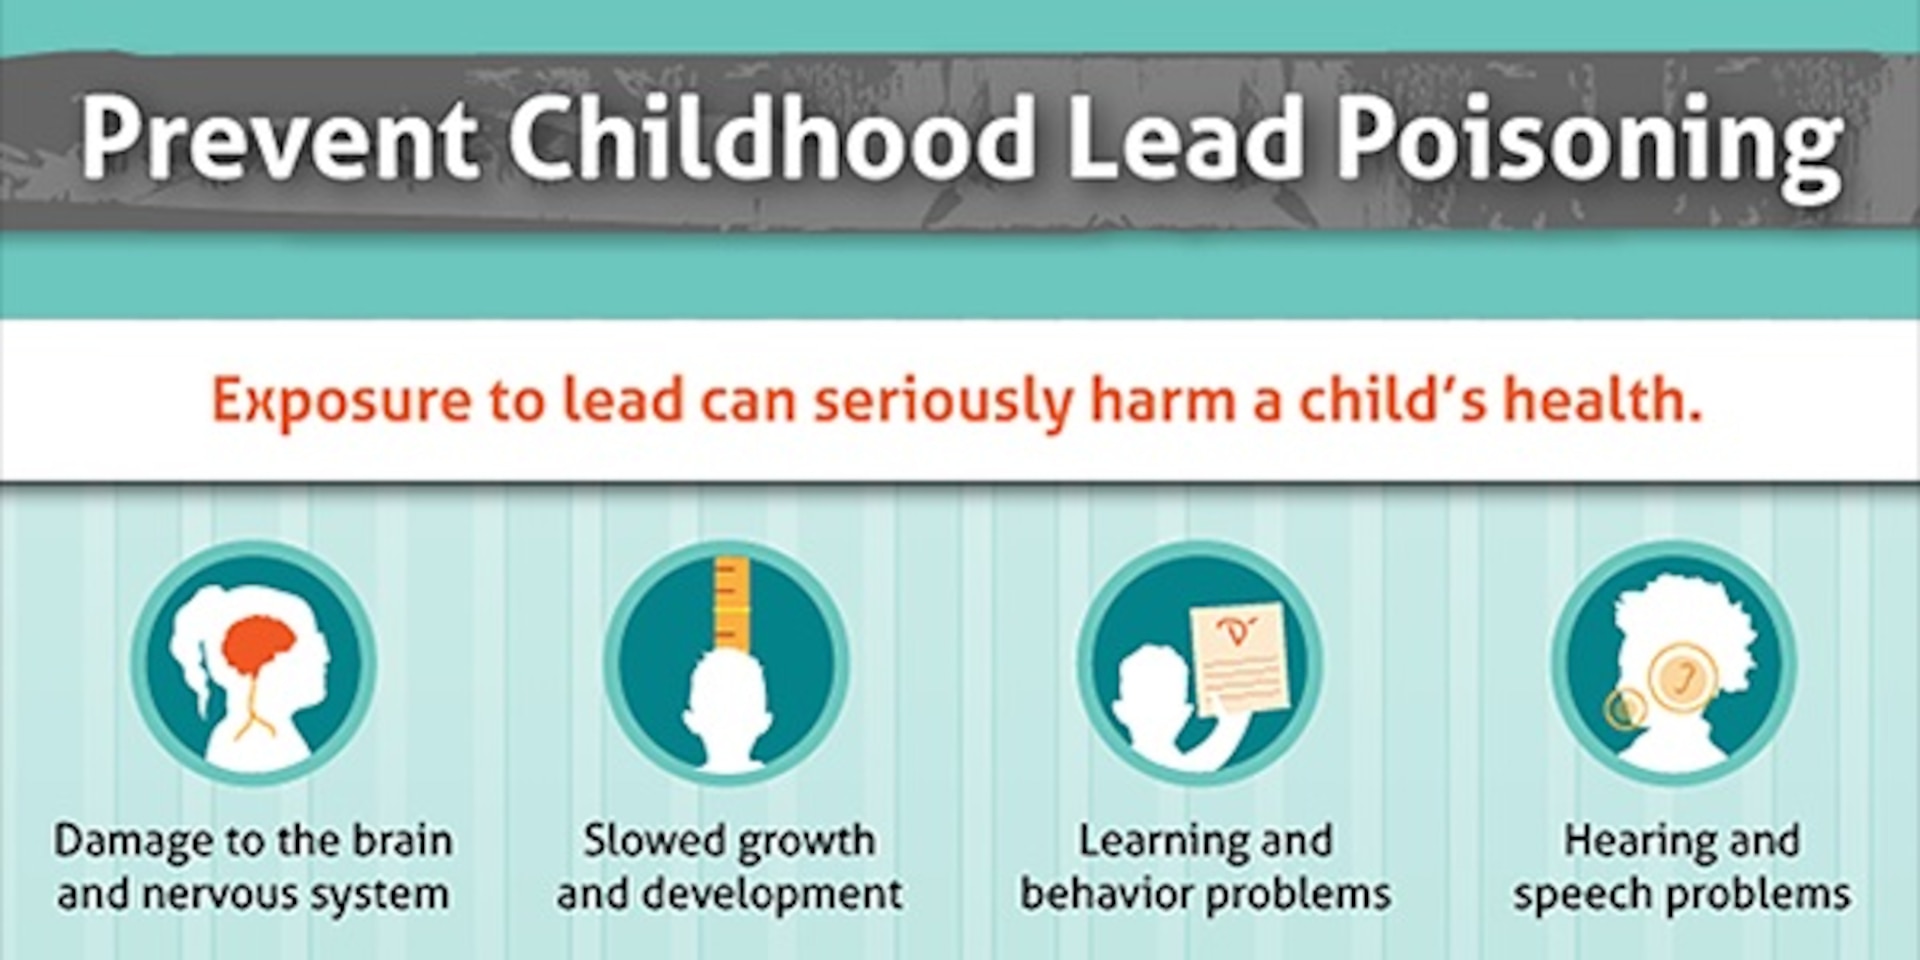 What Makes Lead Poisonous?